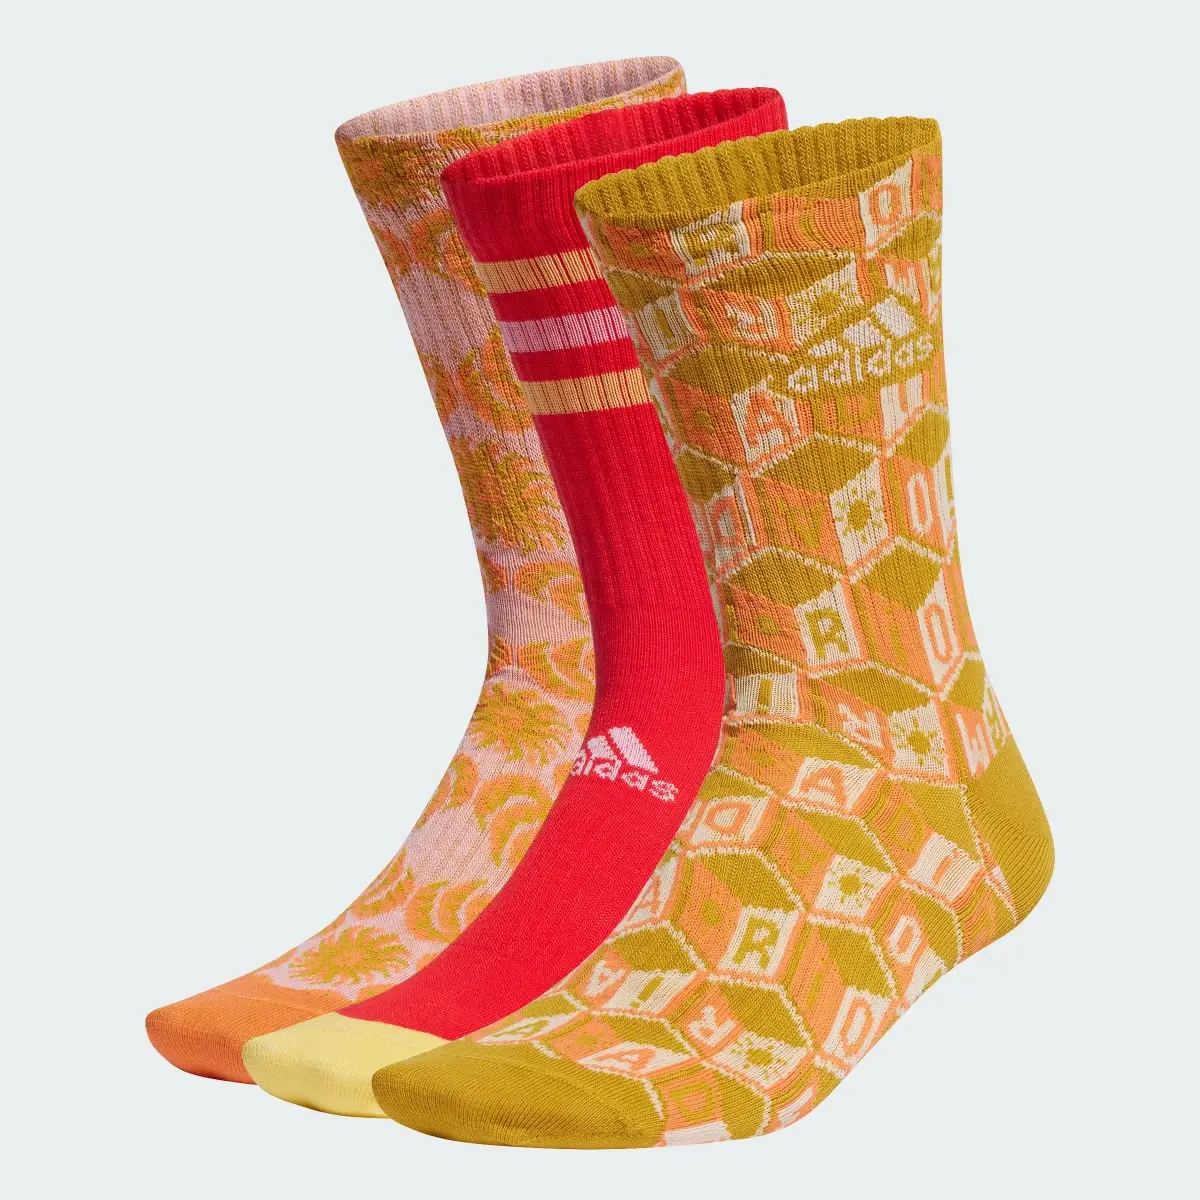 Adidas FARM Rio Bilekli Çorap - 3 Çift. 1